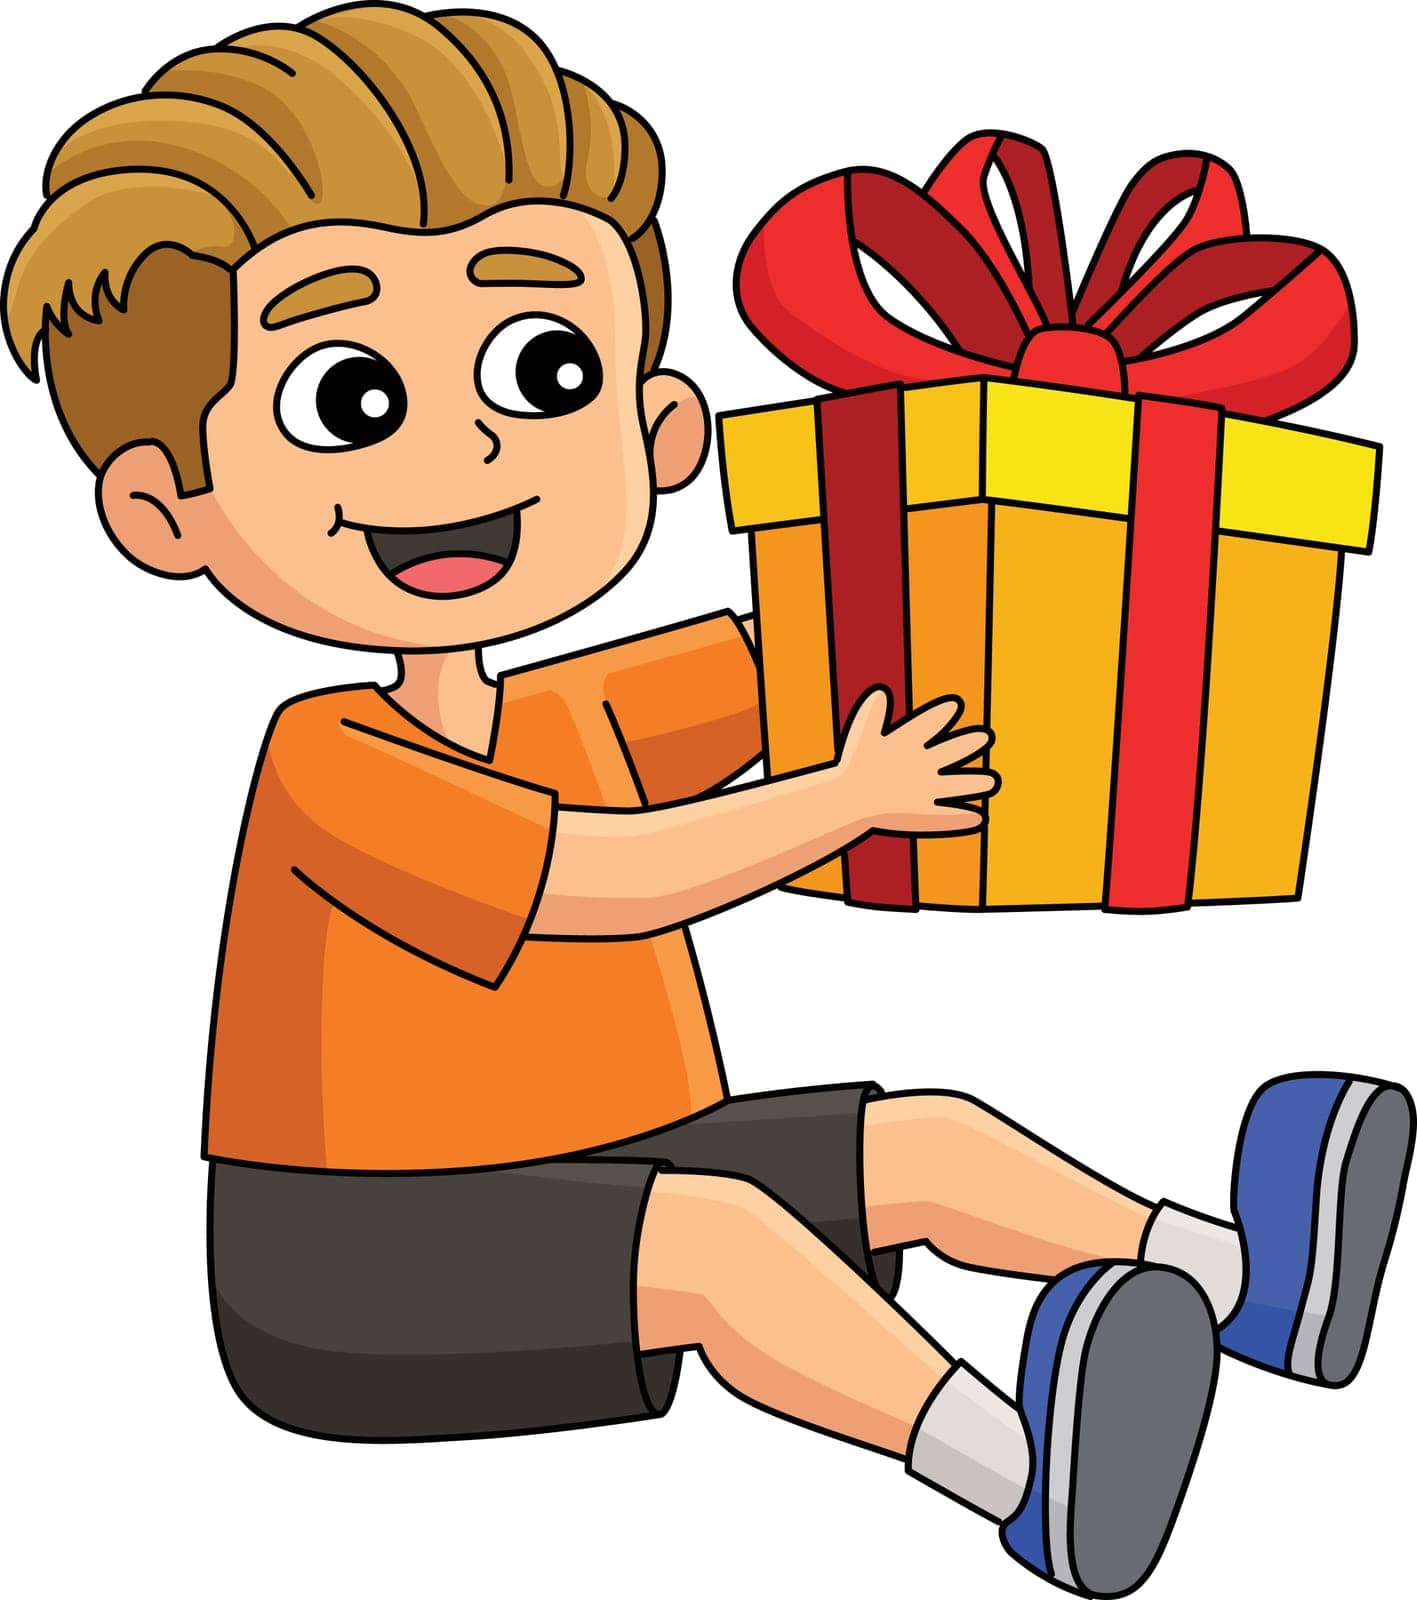 Boy with a Birthday Present Cartoon Clipart by abbydesign